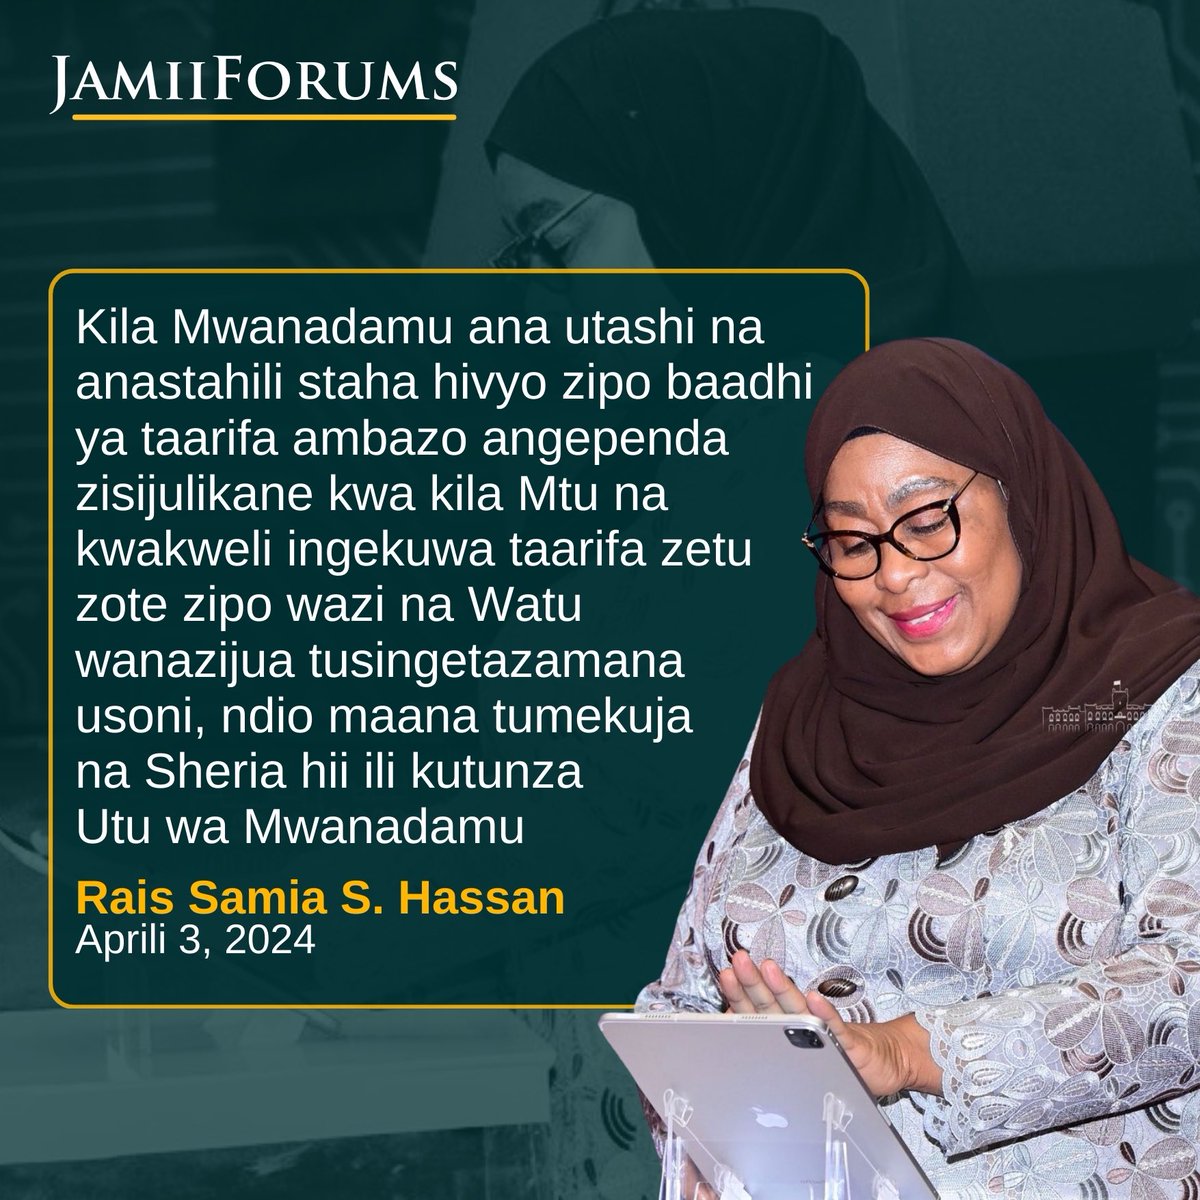 #JamiiForums #Governance #DataPrivacy #PersonalDataProtection #PersonalData #TaarifaBinafsi #DigitalRights #AmkaNaJF #GoodMorning